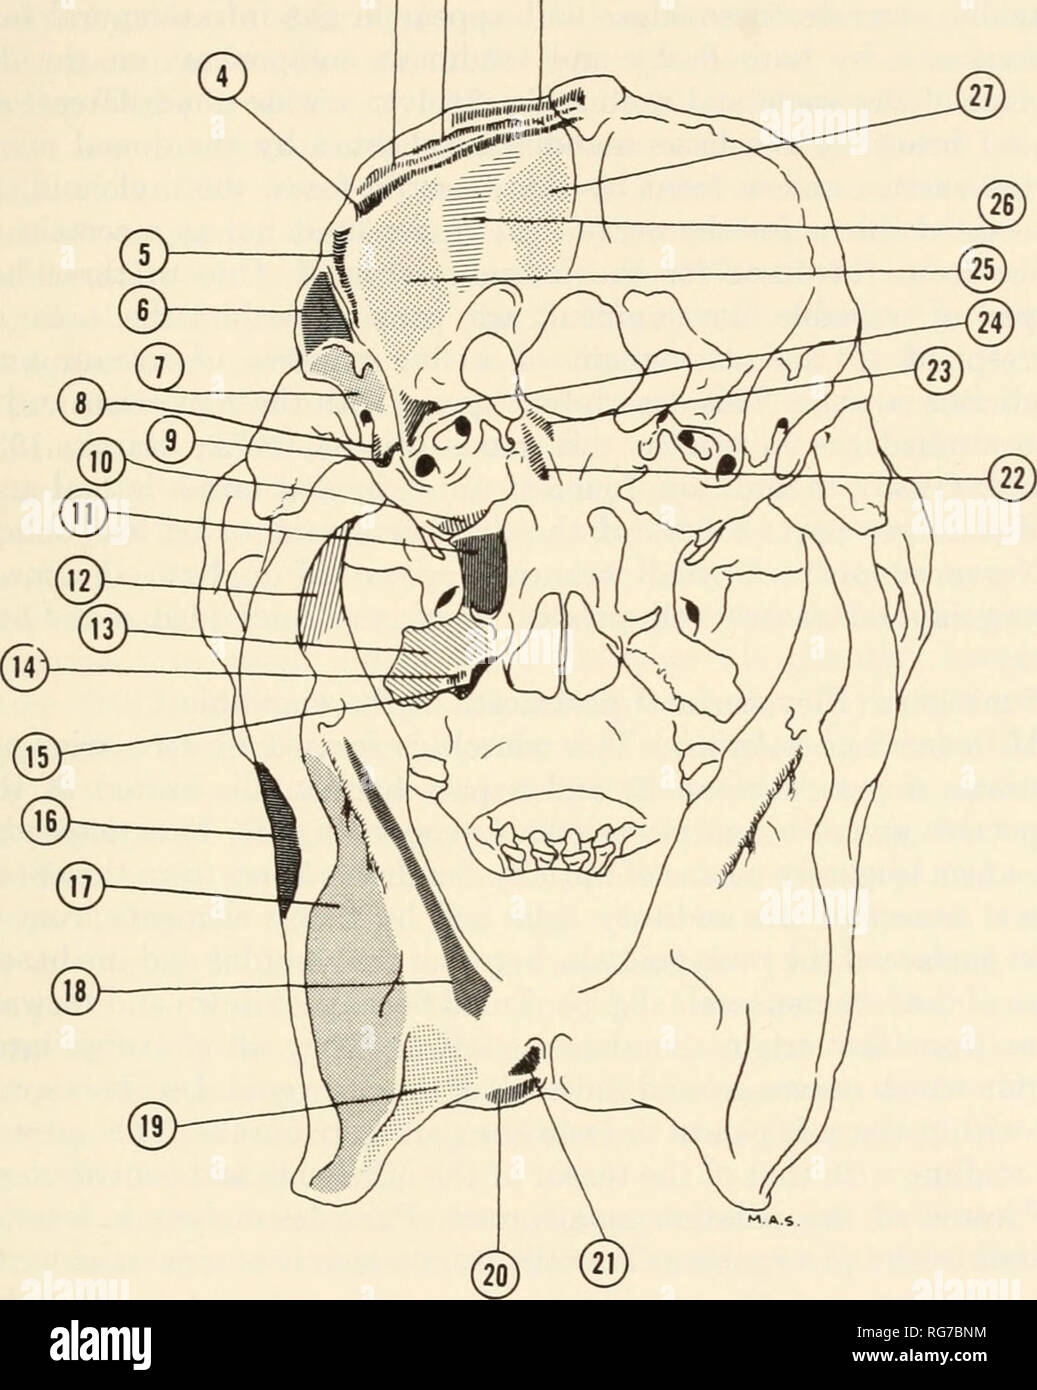 . Bulletin - United States National Museum. Science. MUSCULAR SYSTEM OF THE RED HOWLING MONKEY ®9 9. Figure 5.—Muscular attachments in the cranium, dorsal view (1, m. trapezius; 2, m. rhomboideus; 3, m. splenius; 4, mm. spinalis et semispinalis capitis; 5, m. longissimus cervicis et capitis; 6, m. sternocleidomastoideus; 7, m. digastricus; 8, m. stylohyoideus; 9, m. stylopharyngeus; 10, m. levator veli palatini; 11, m. tensor veli palatini; 12, m. pterygoideus lateralis; 13, m. pterygoideus medialis; 14, m. palatopharyngeus; 15, m. constrictor pharyngis superior; 16, m. masseter; 17, m. pteryg Stock Photo